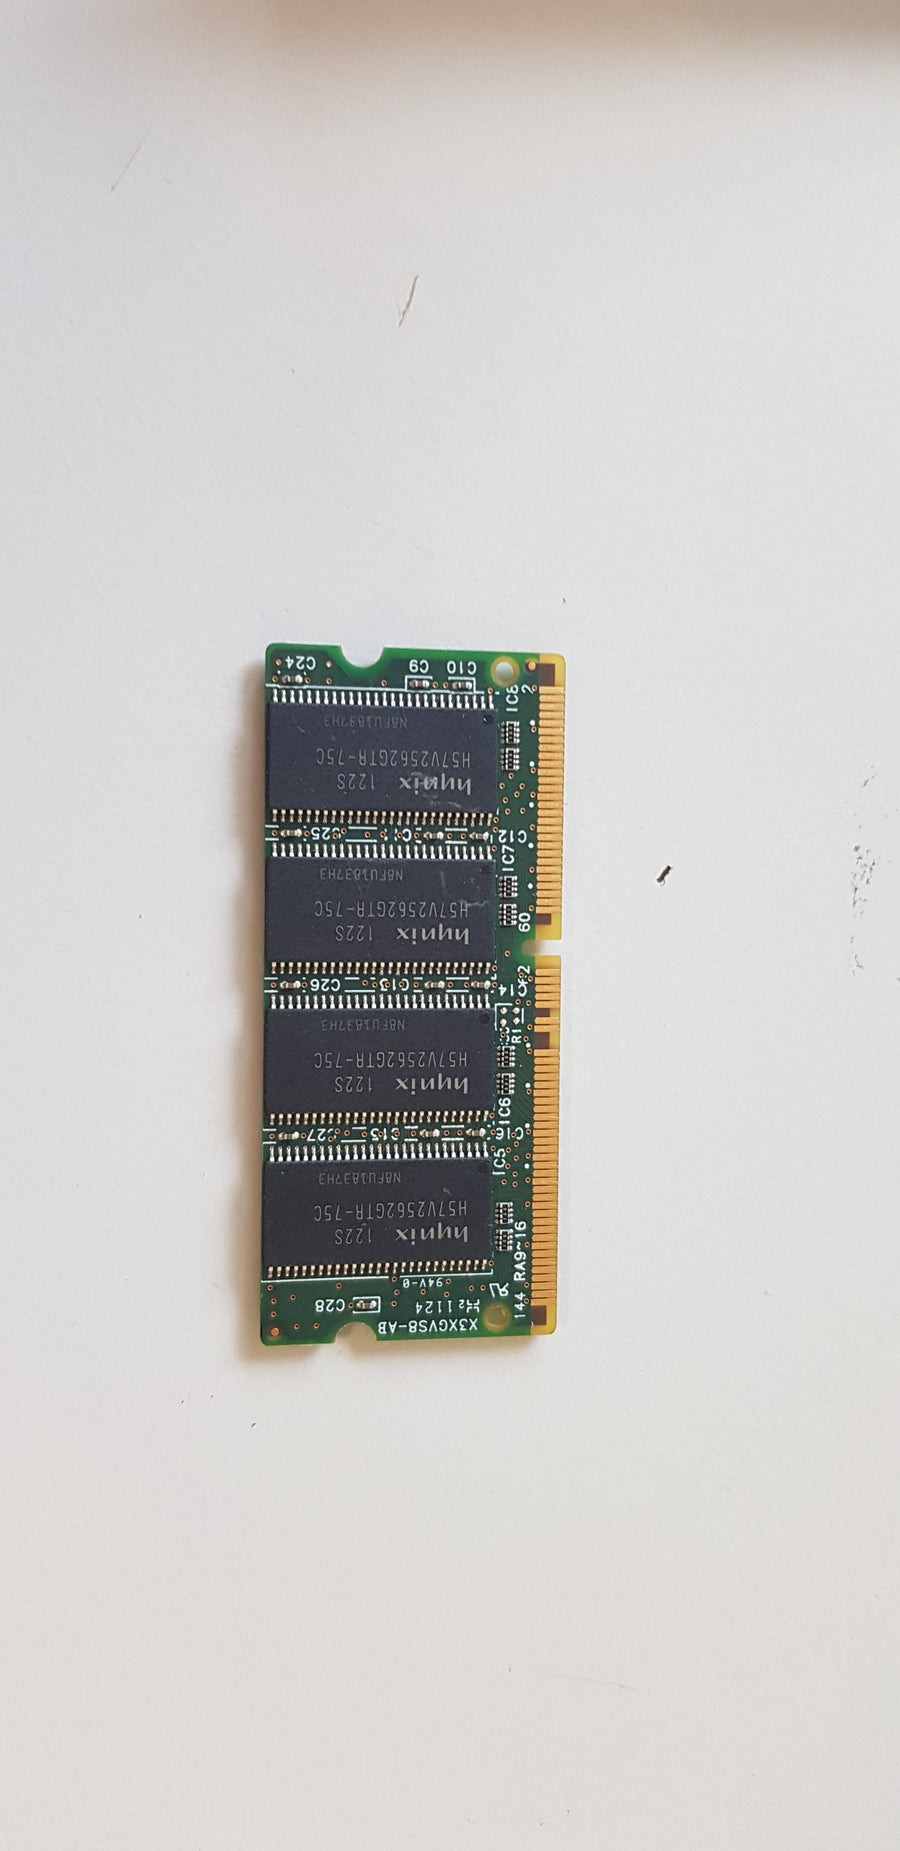 Buffalo 256MB PC133S 133MHz CL3 32Mx64 SDRAM NonECC Unbuffered SODIMM Memory Module (VNR133-D256HFJFX)